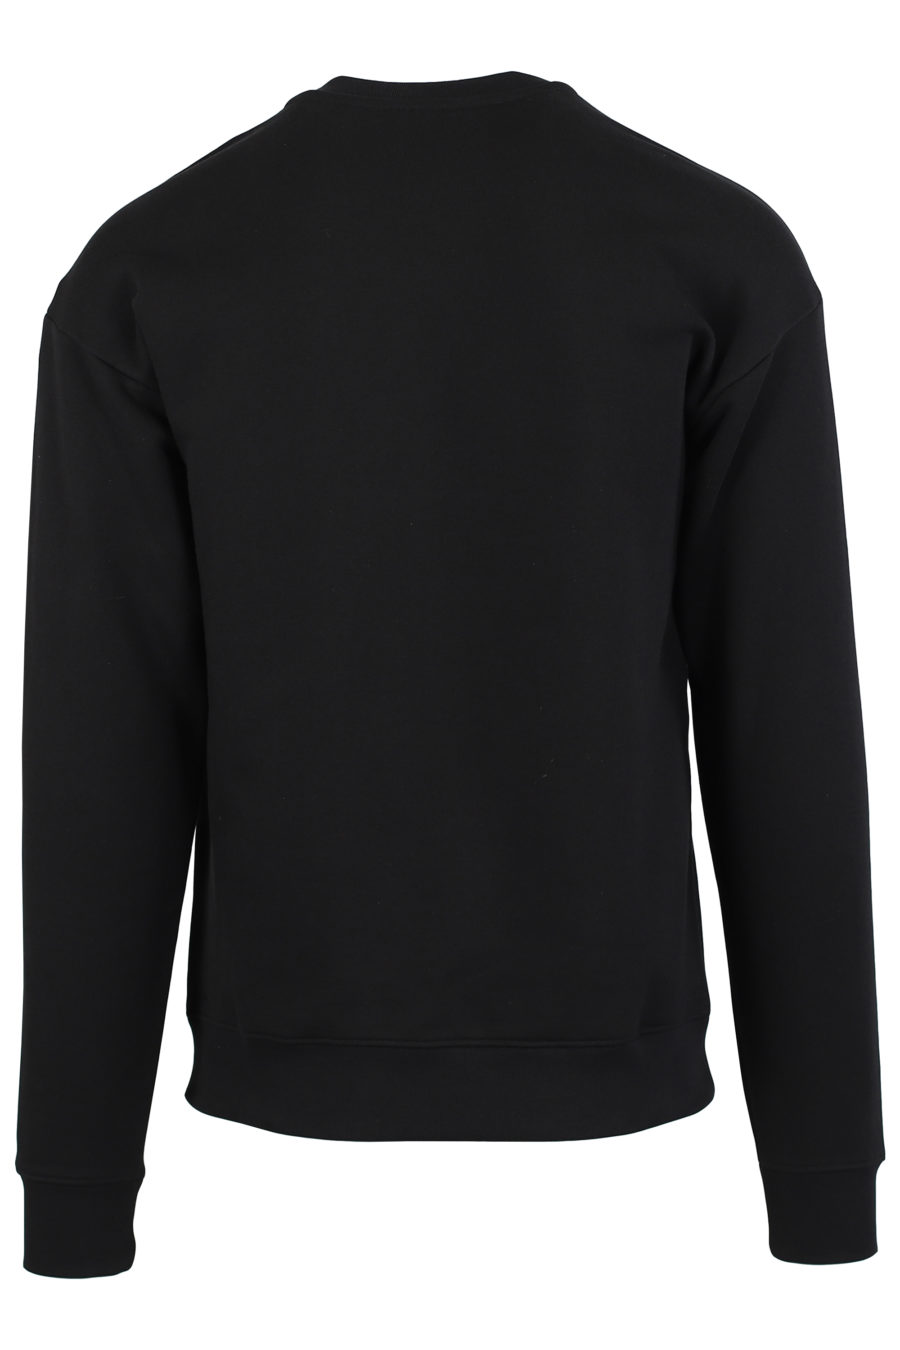 Black sweatshirt with gold logo - IMG 0959